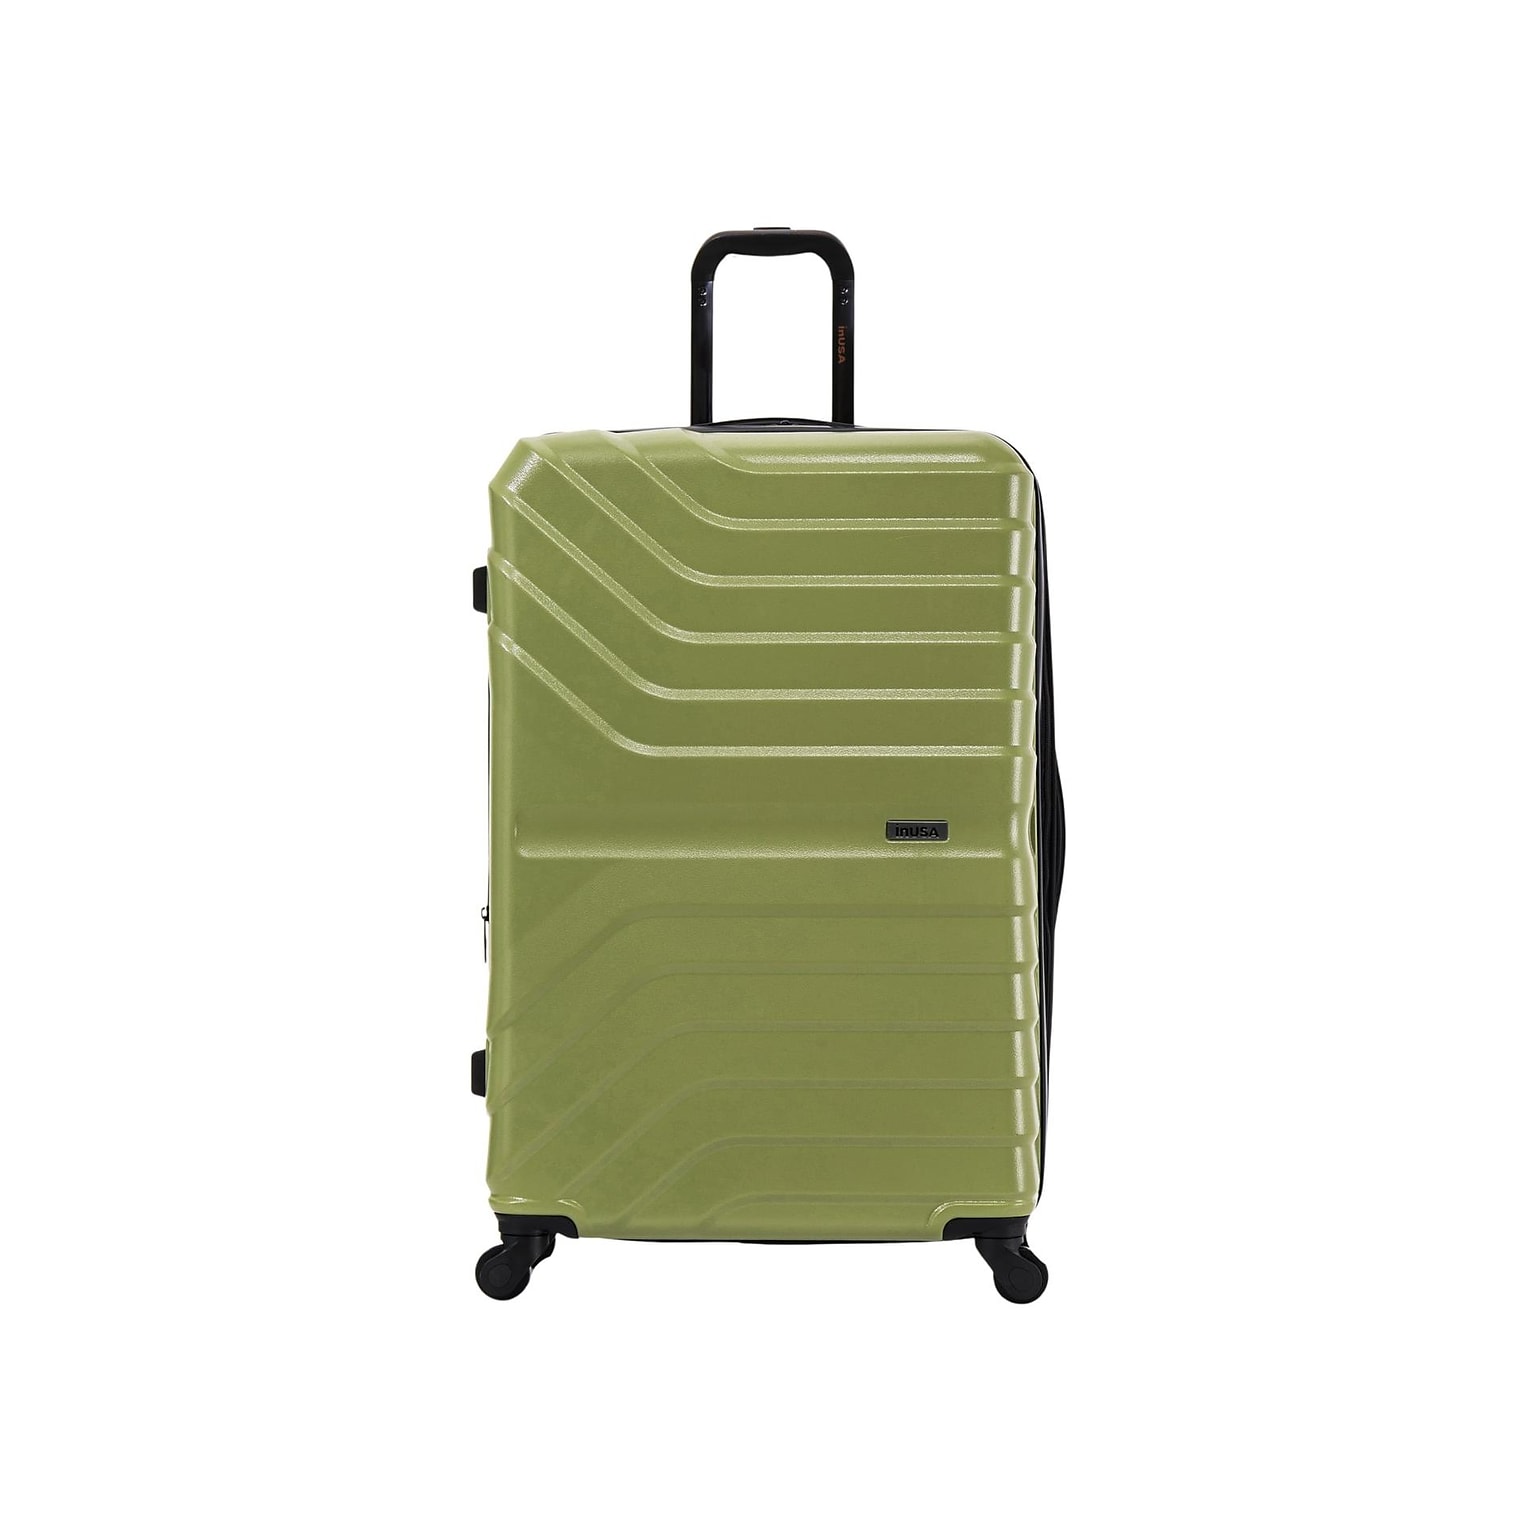 InUSA Aurum 31.92 Hardside Suitcase, 4-Wheeled Spinner, Green (IUAUR00L-GRN)